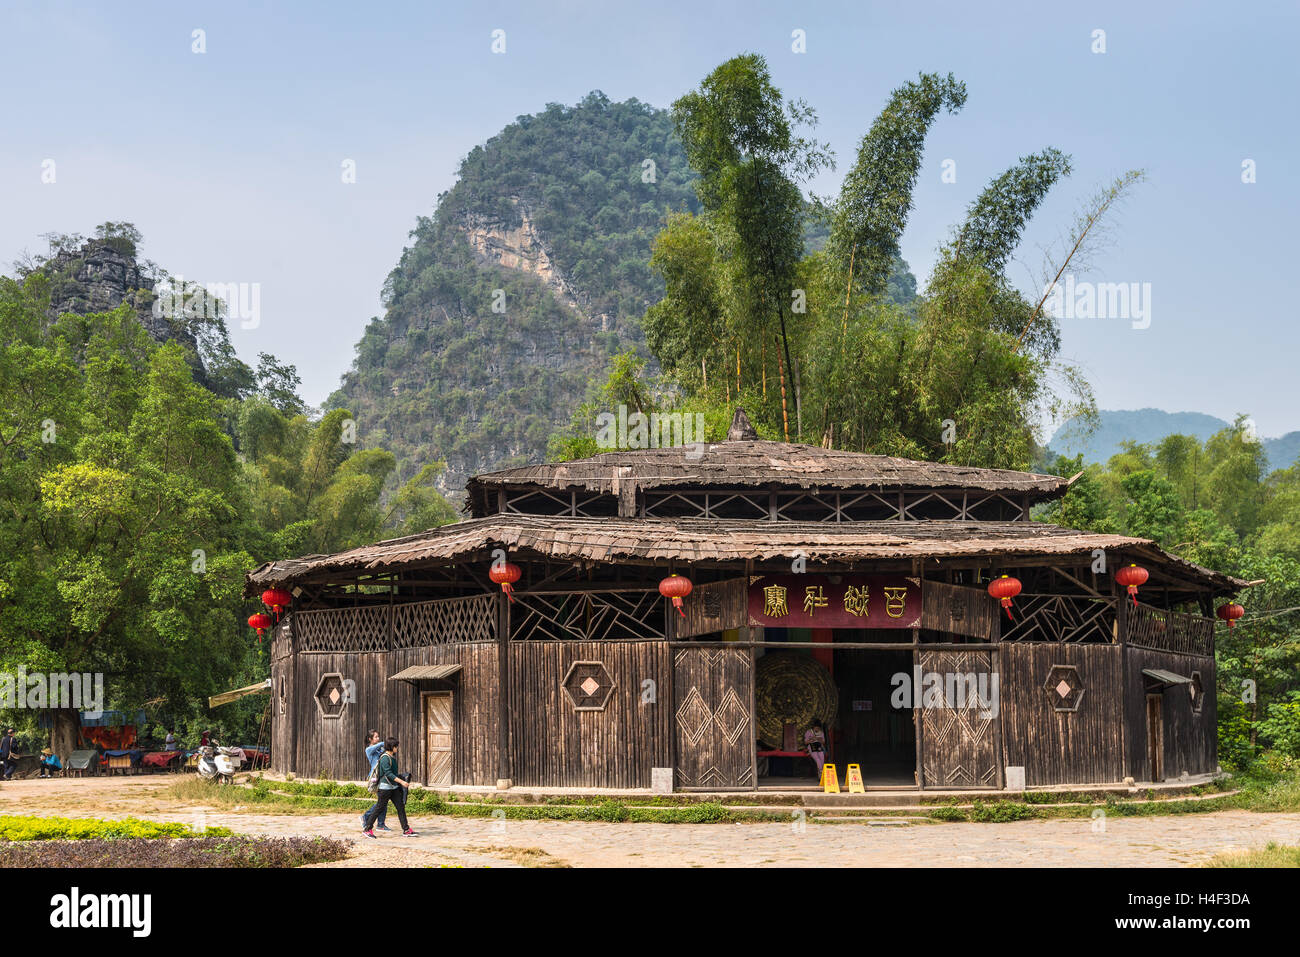 Wooden Building at the Banyan Tree Park at Chuanyan Village, Yangshuo County, China. Stock Photo